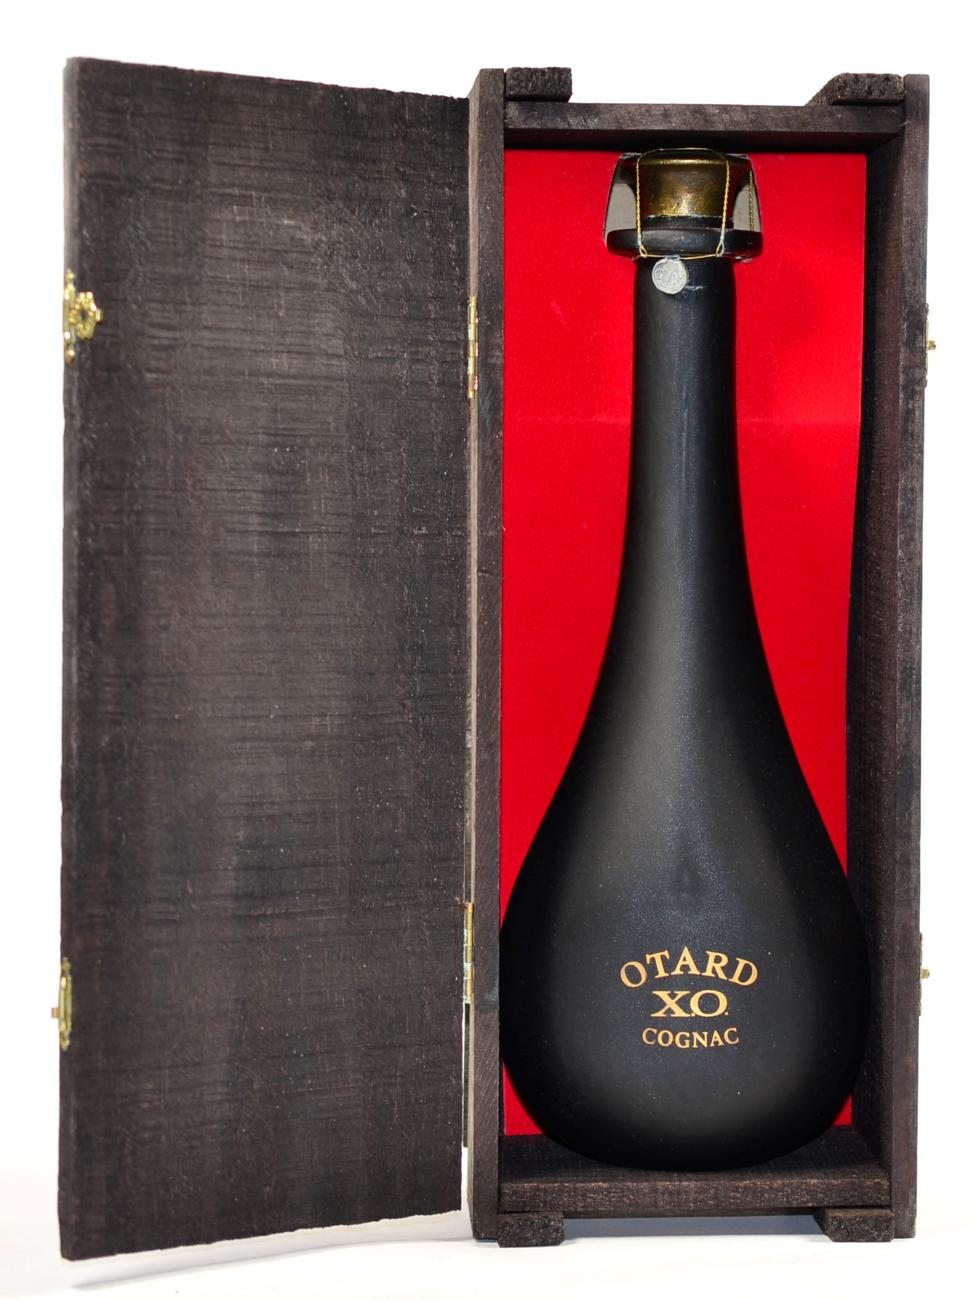 Otard XO Cognac, 70cl, 40%, in wooden presentation case